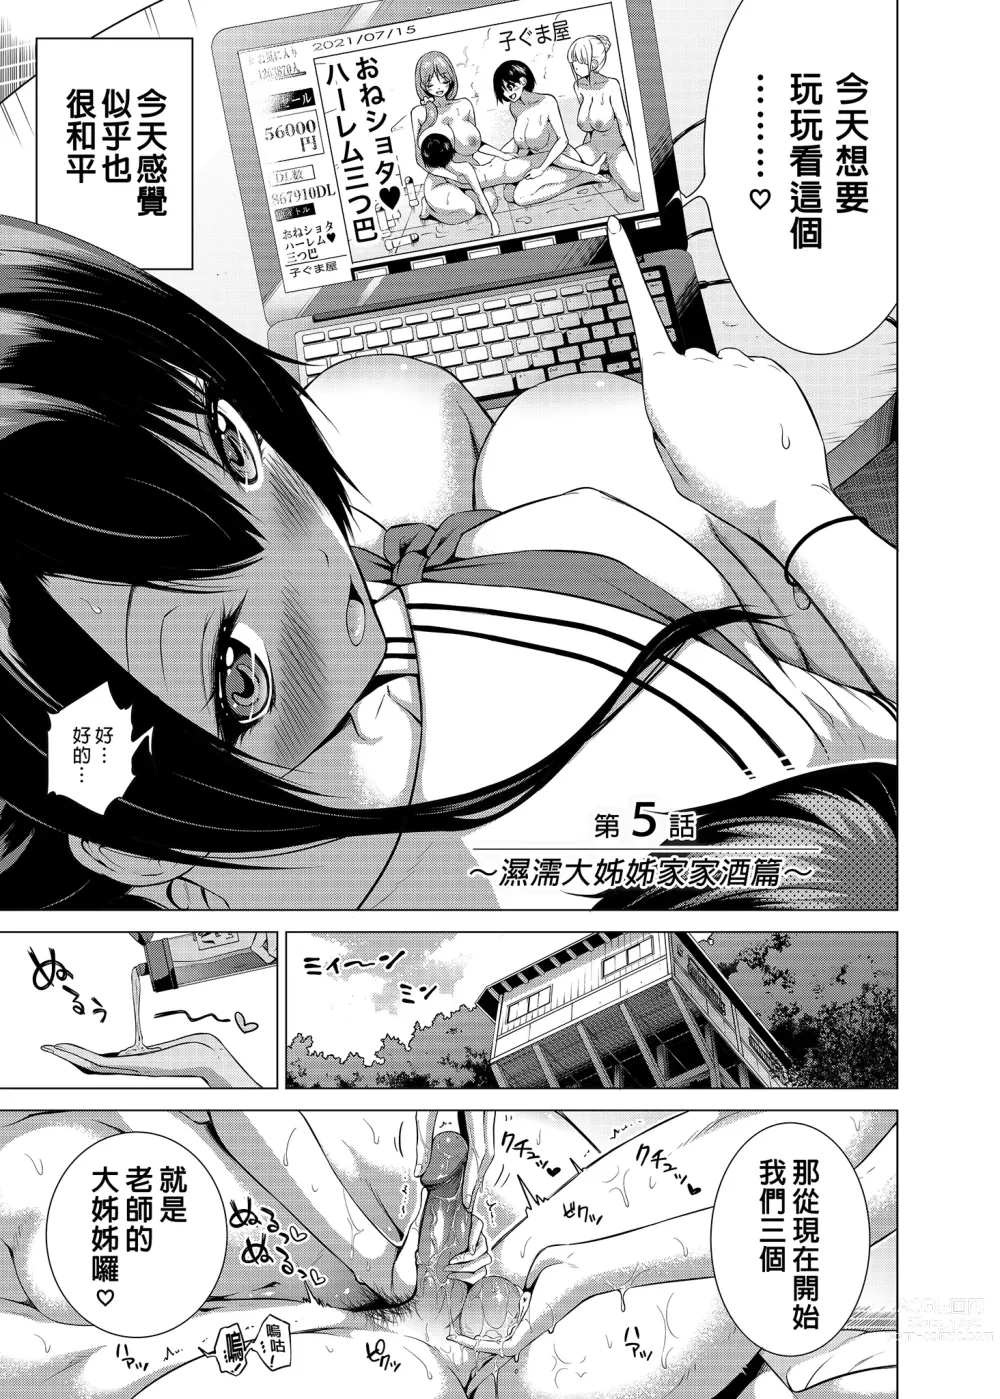 Page 6 of manga 七夏5